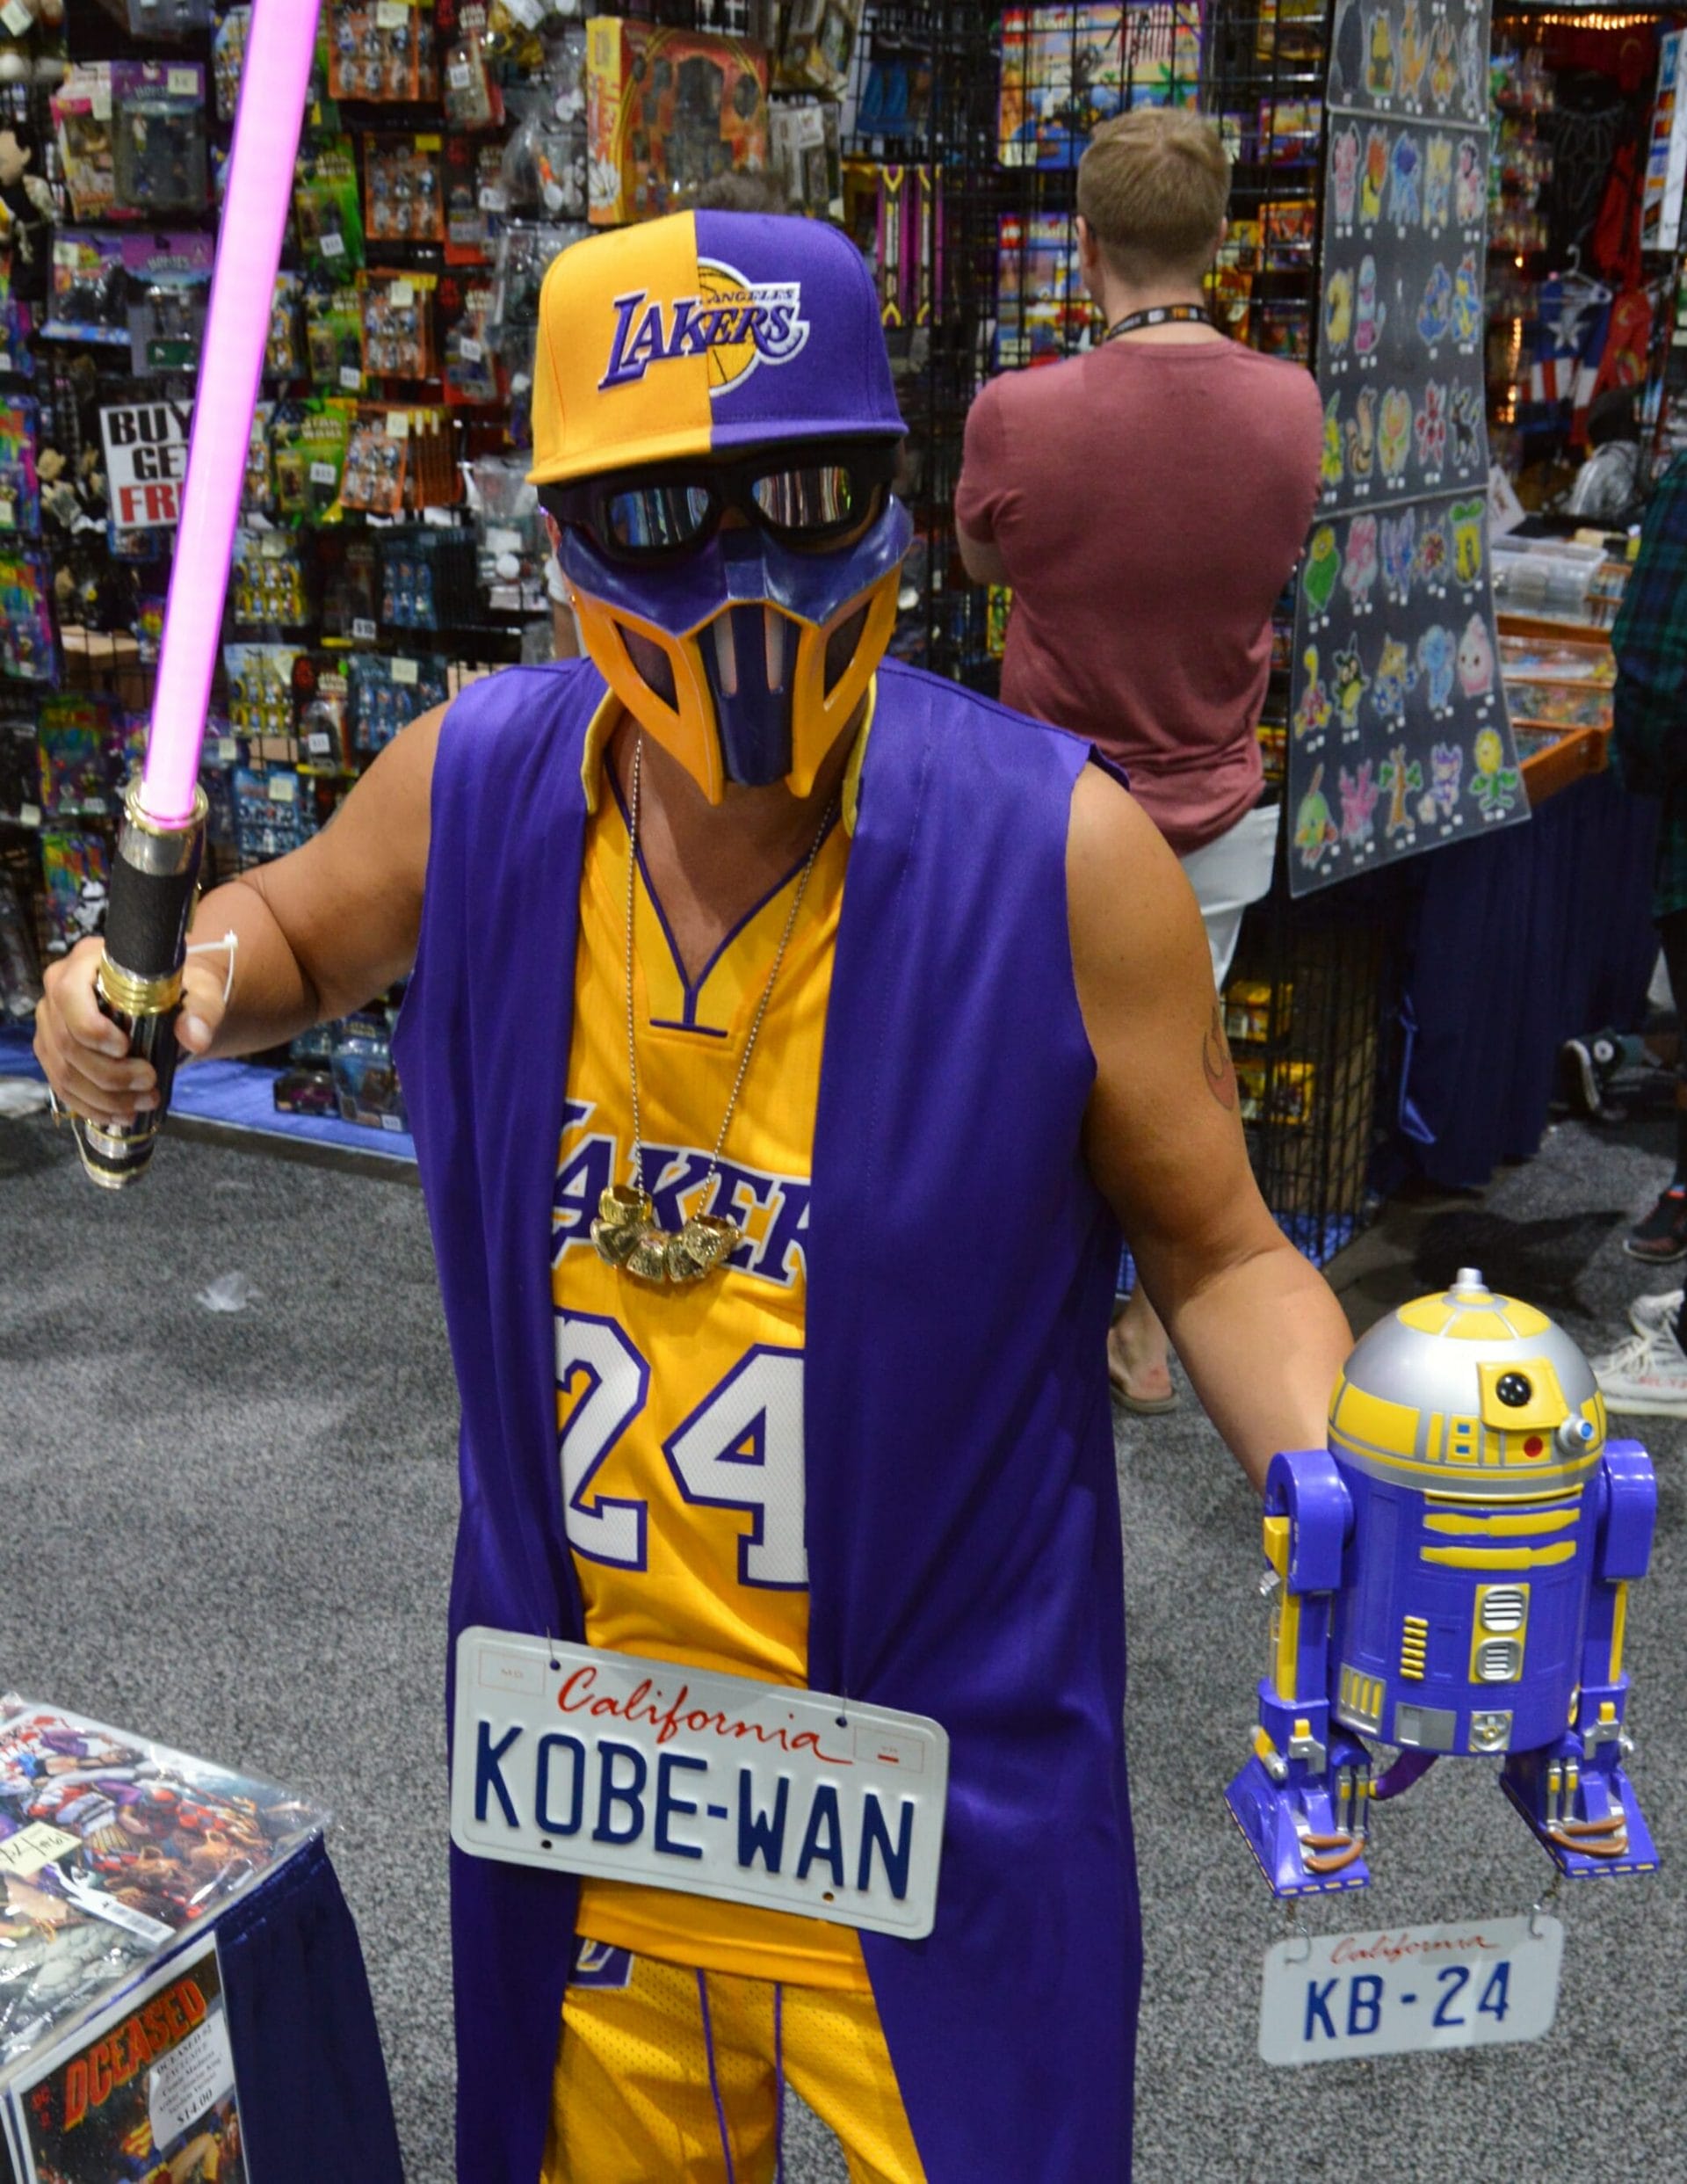 Kobe-Wan